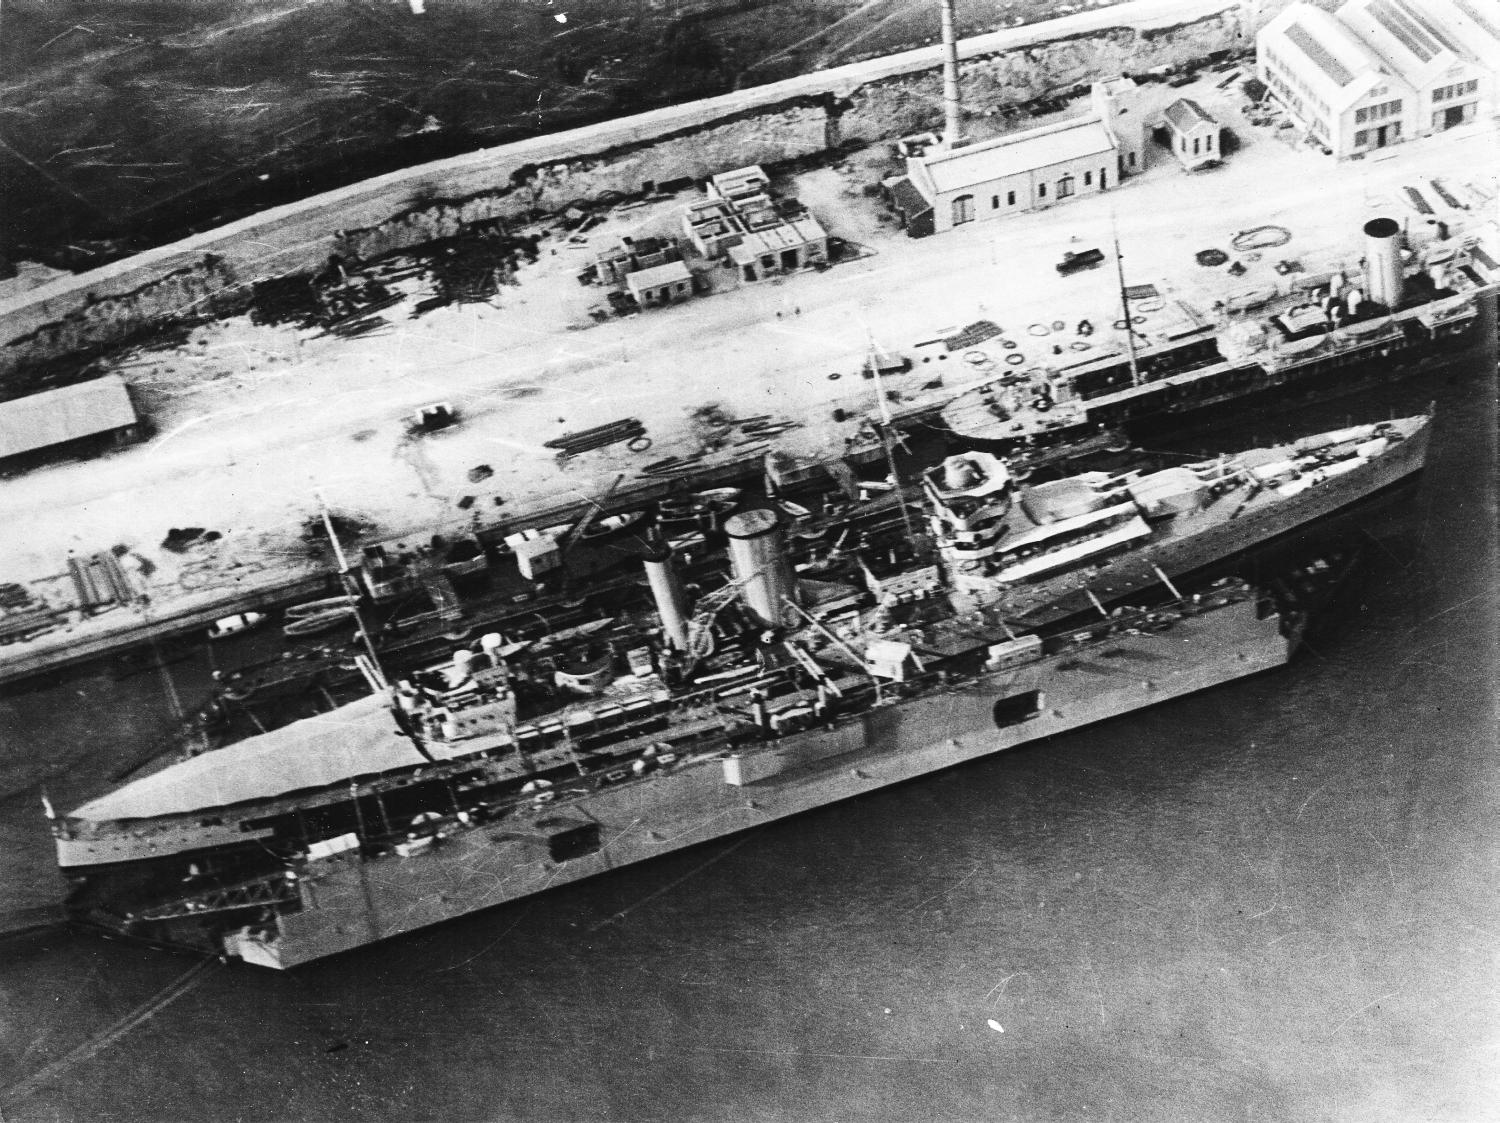 HMS York in Admiralty Floating Dock No. 1 at Royal Naval Dockyard, Bermuda, 1934